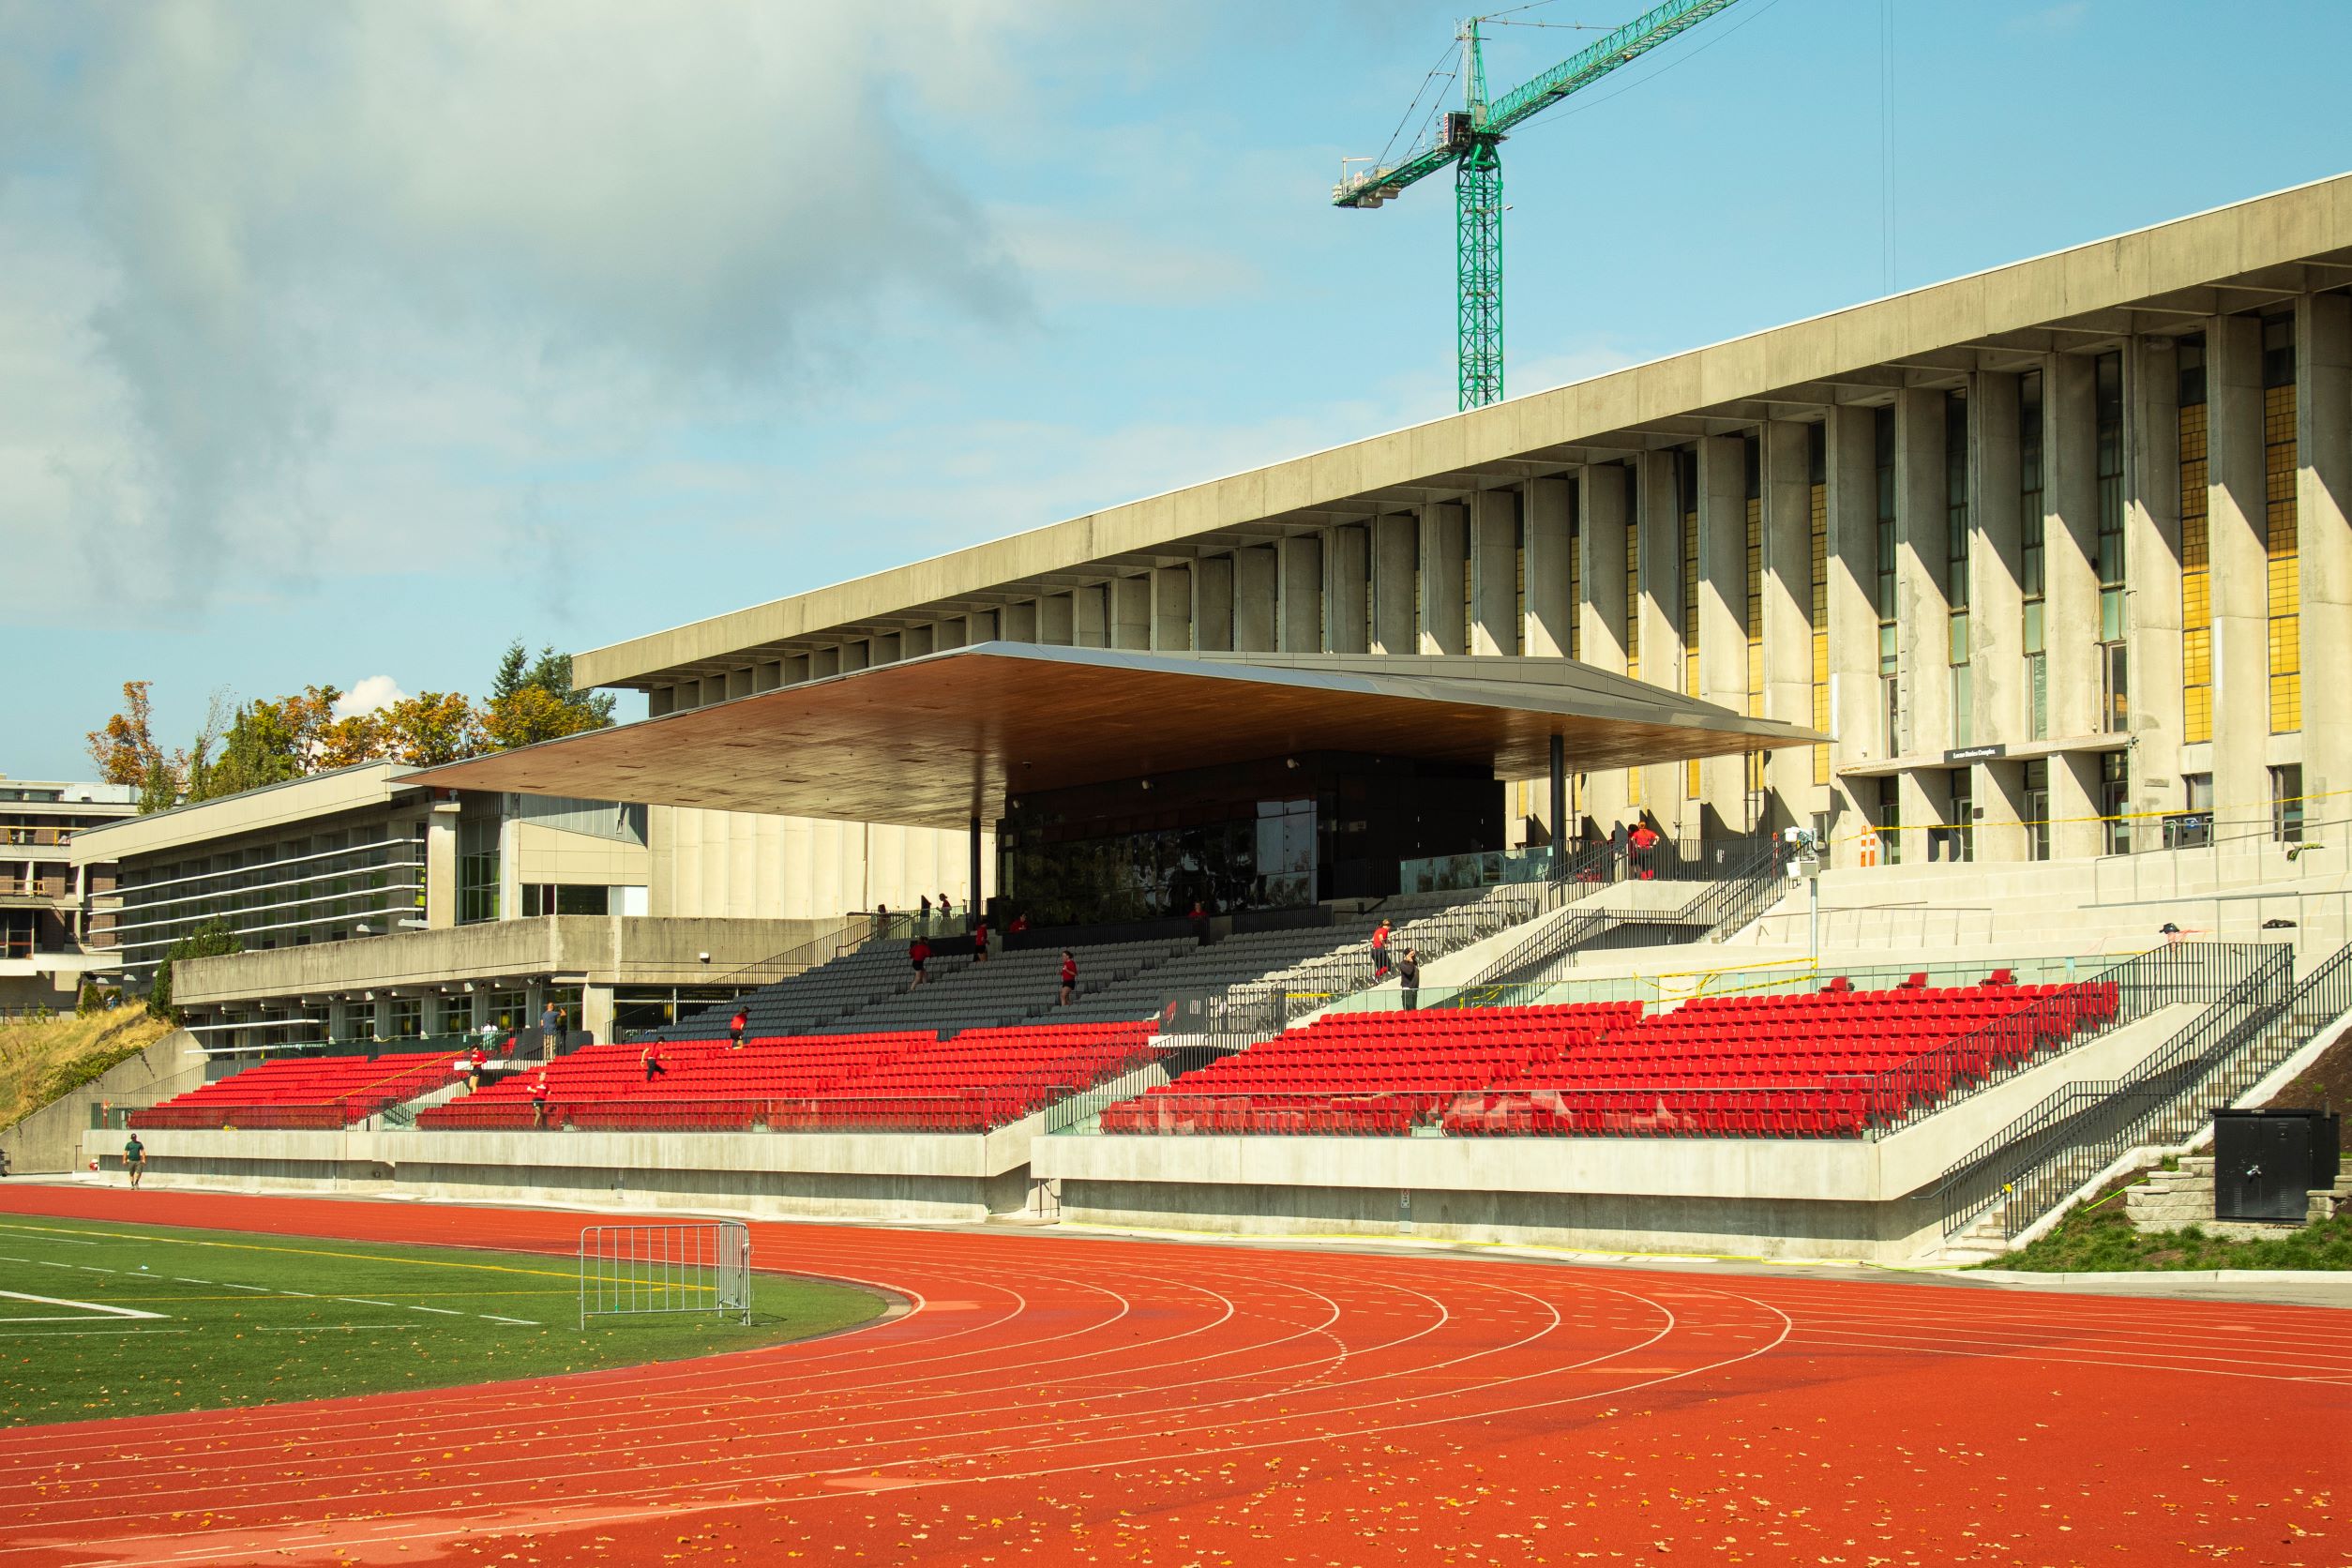 SFU Stadium with red seating